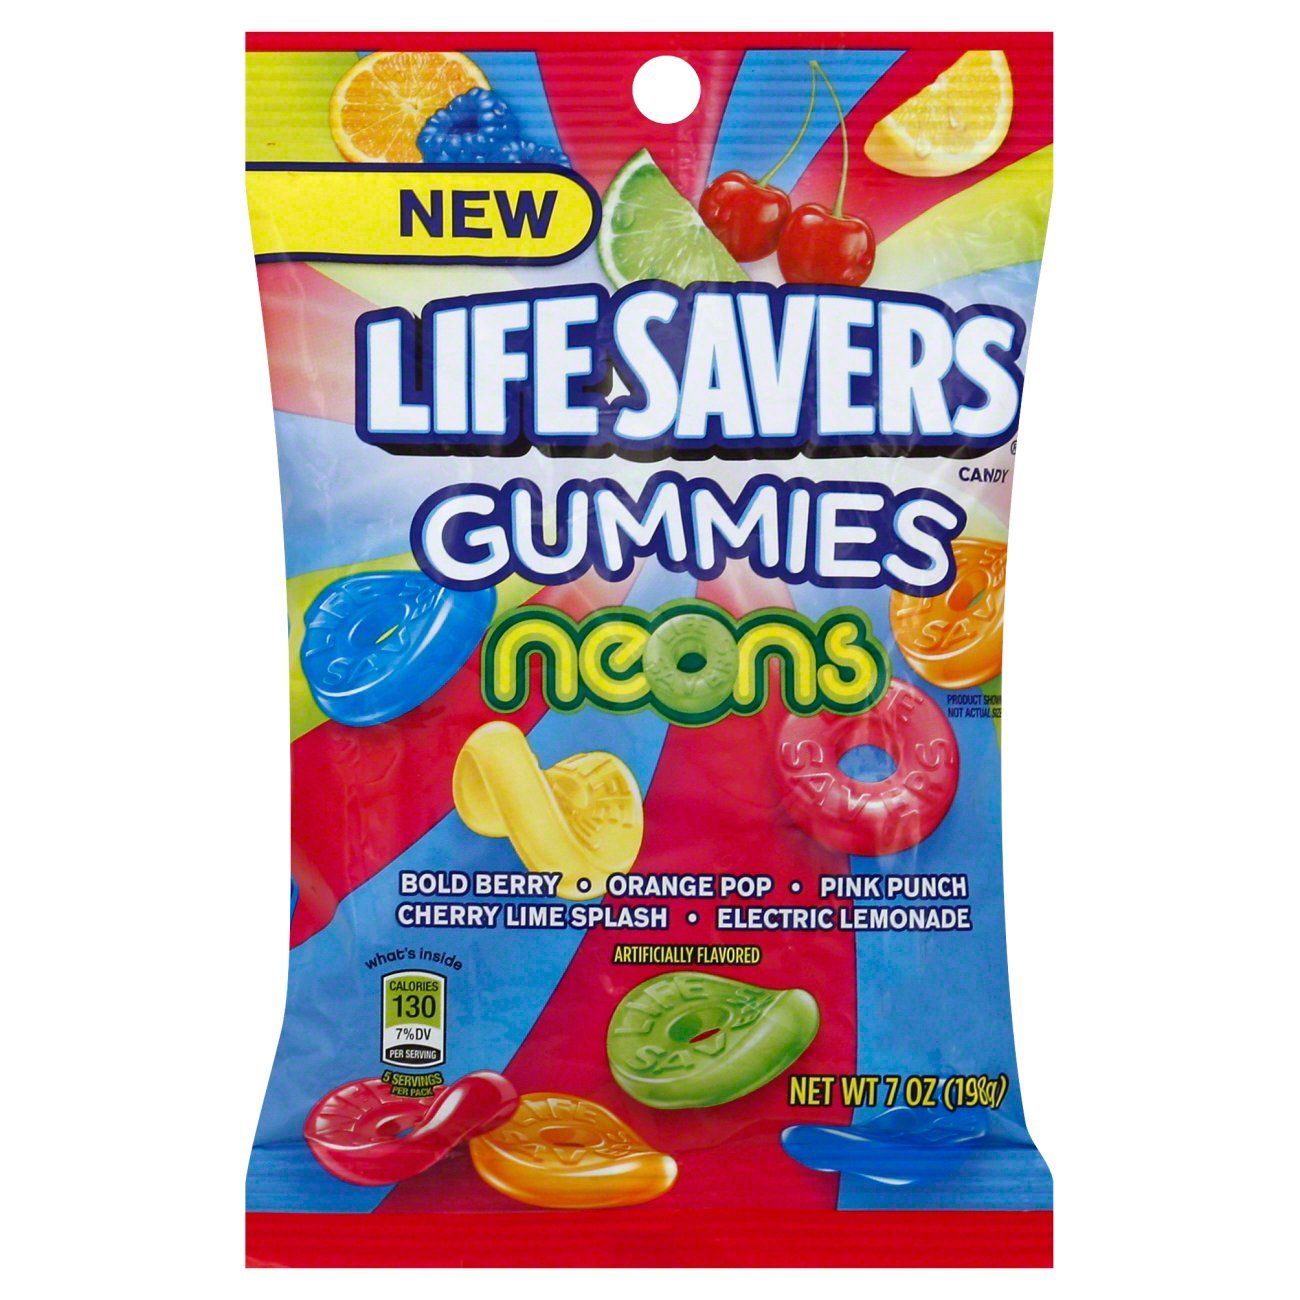 Lifesavers Gummies Neons Flavor Mix